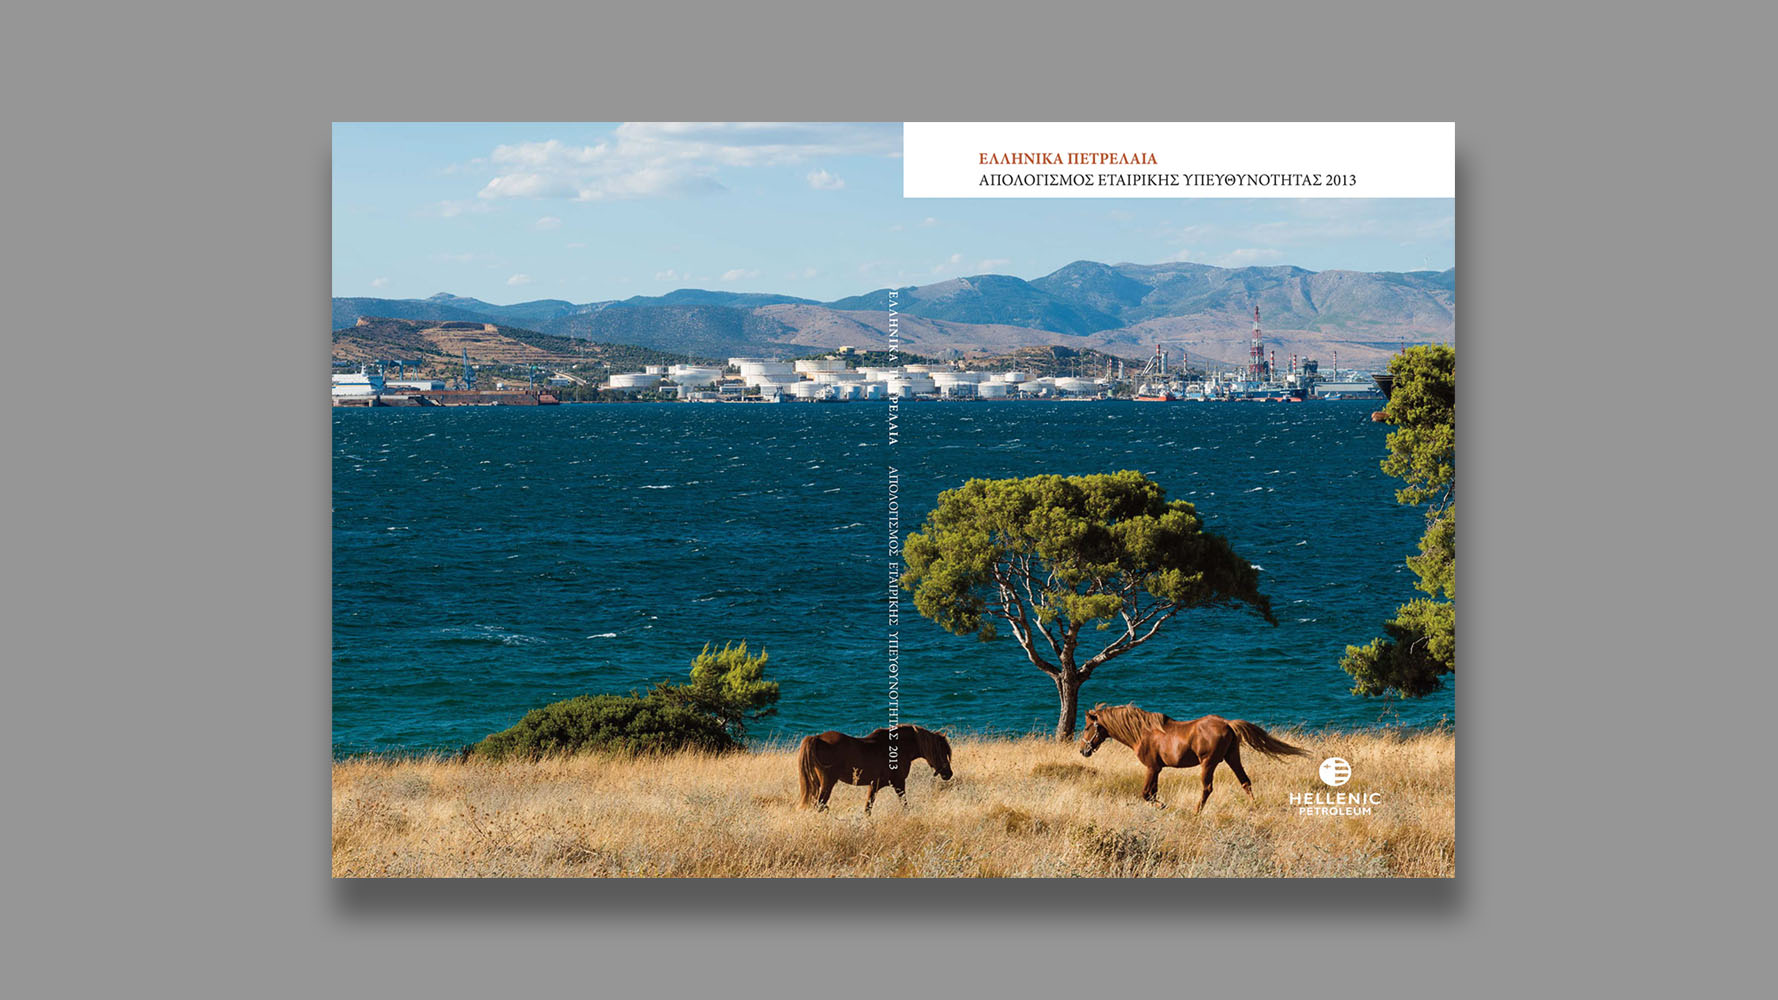 Hellenic Petroleum, Corporate Responsibility Report, 2013